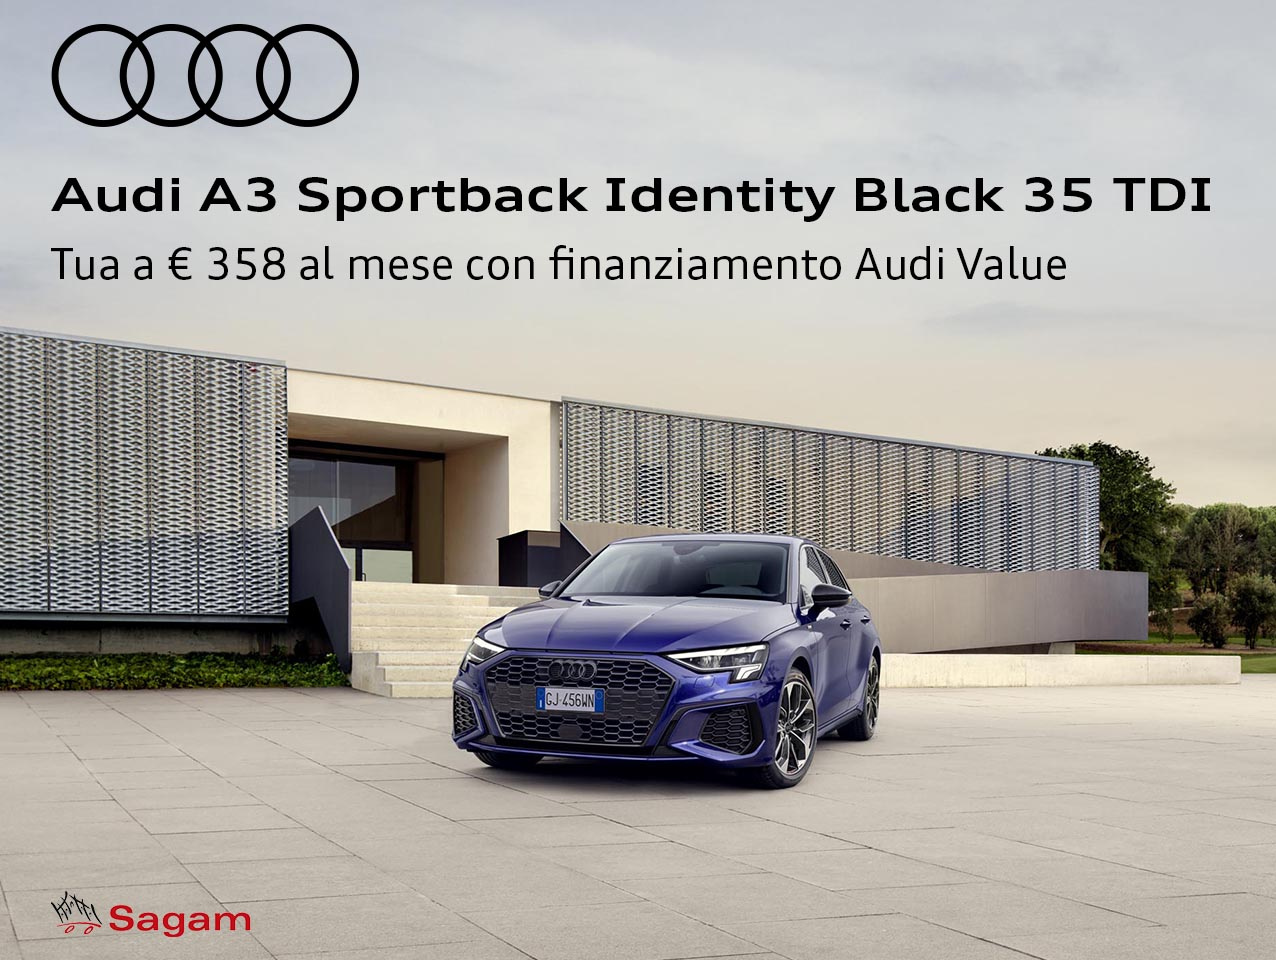 Nuova Audi A3 Sportback Identity Black 35 TDI